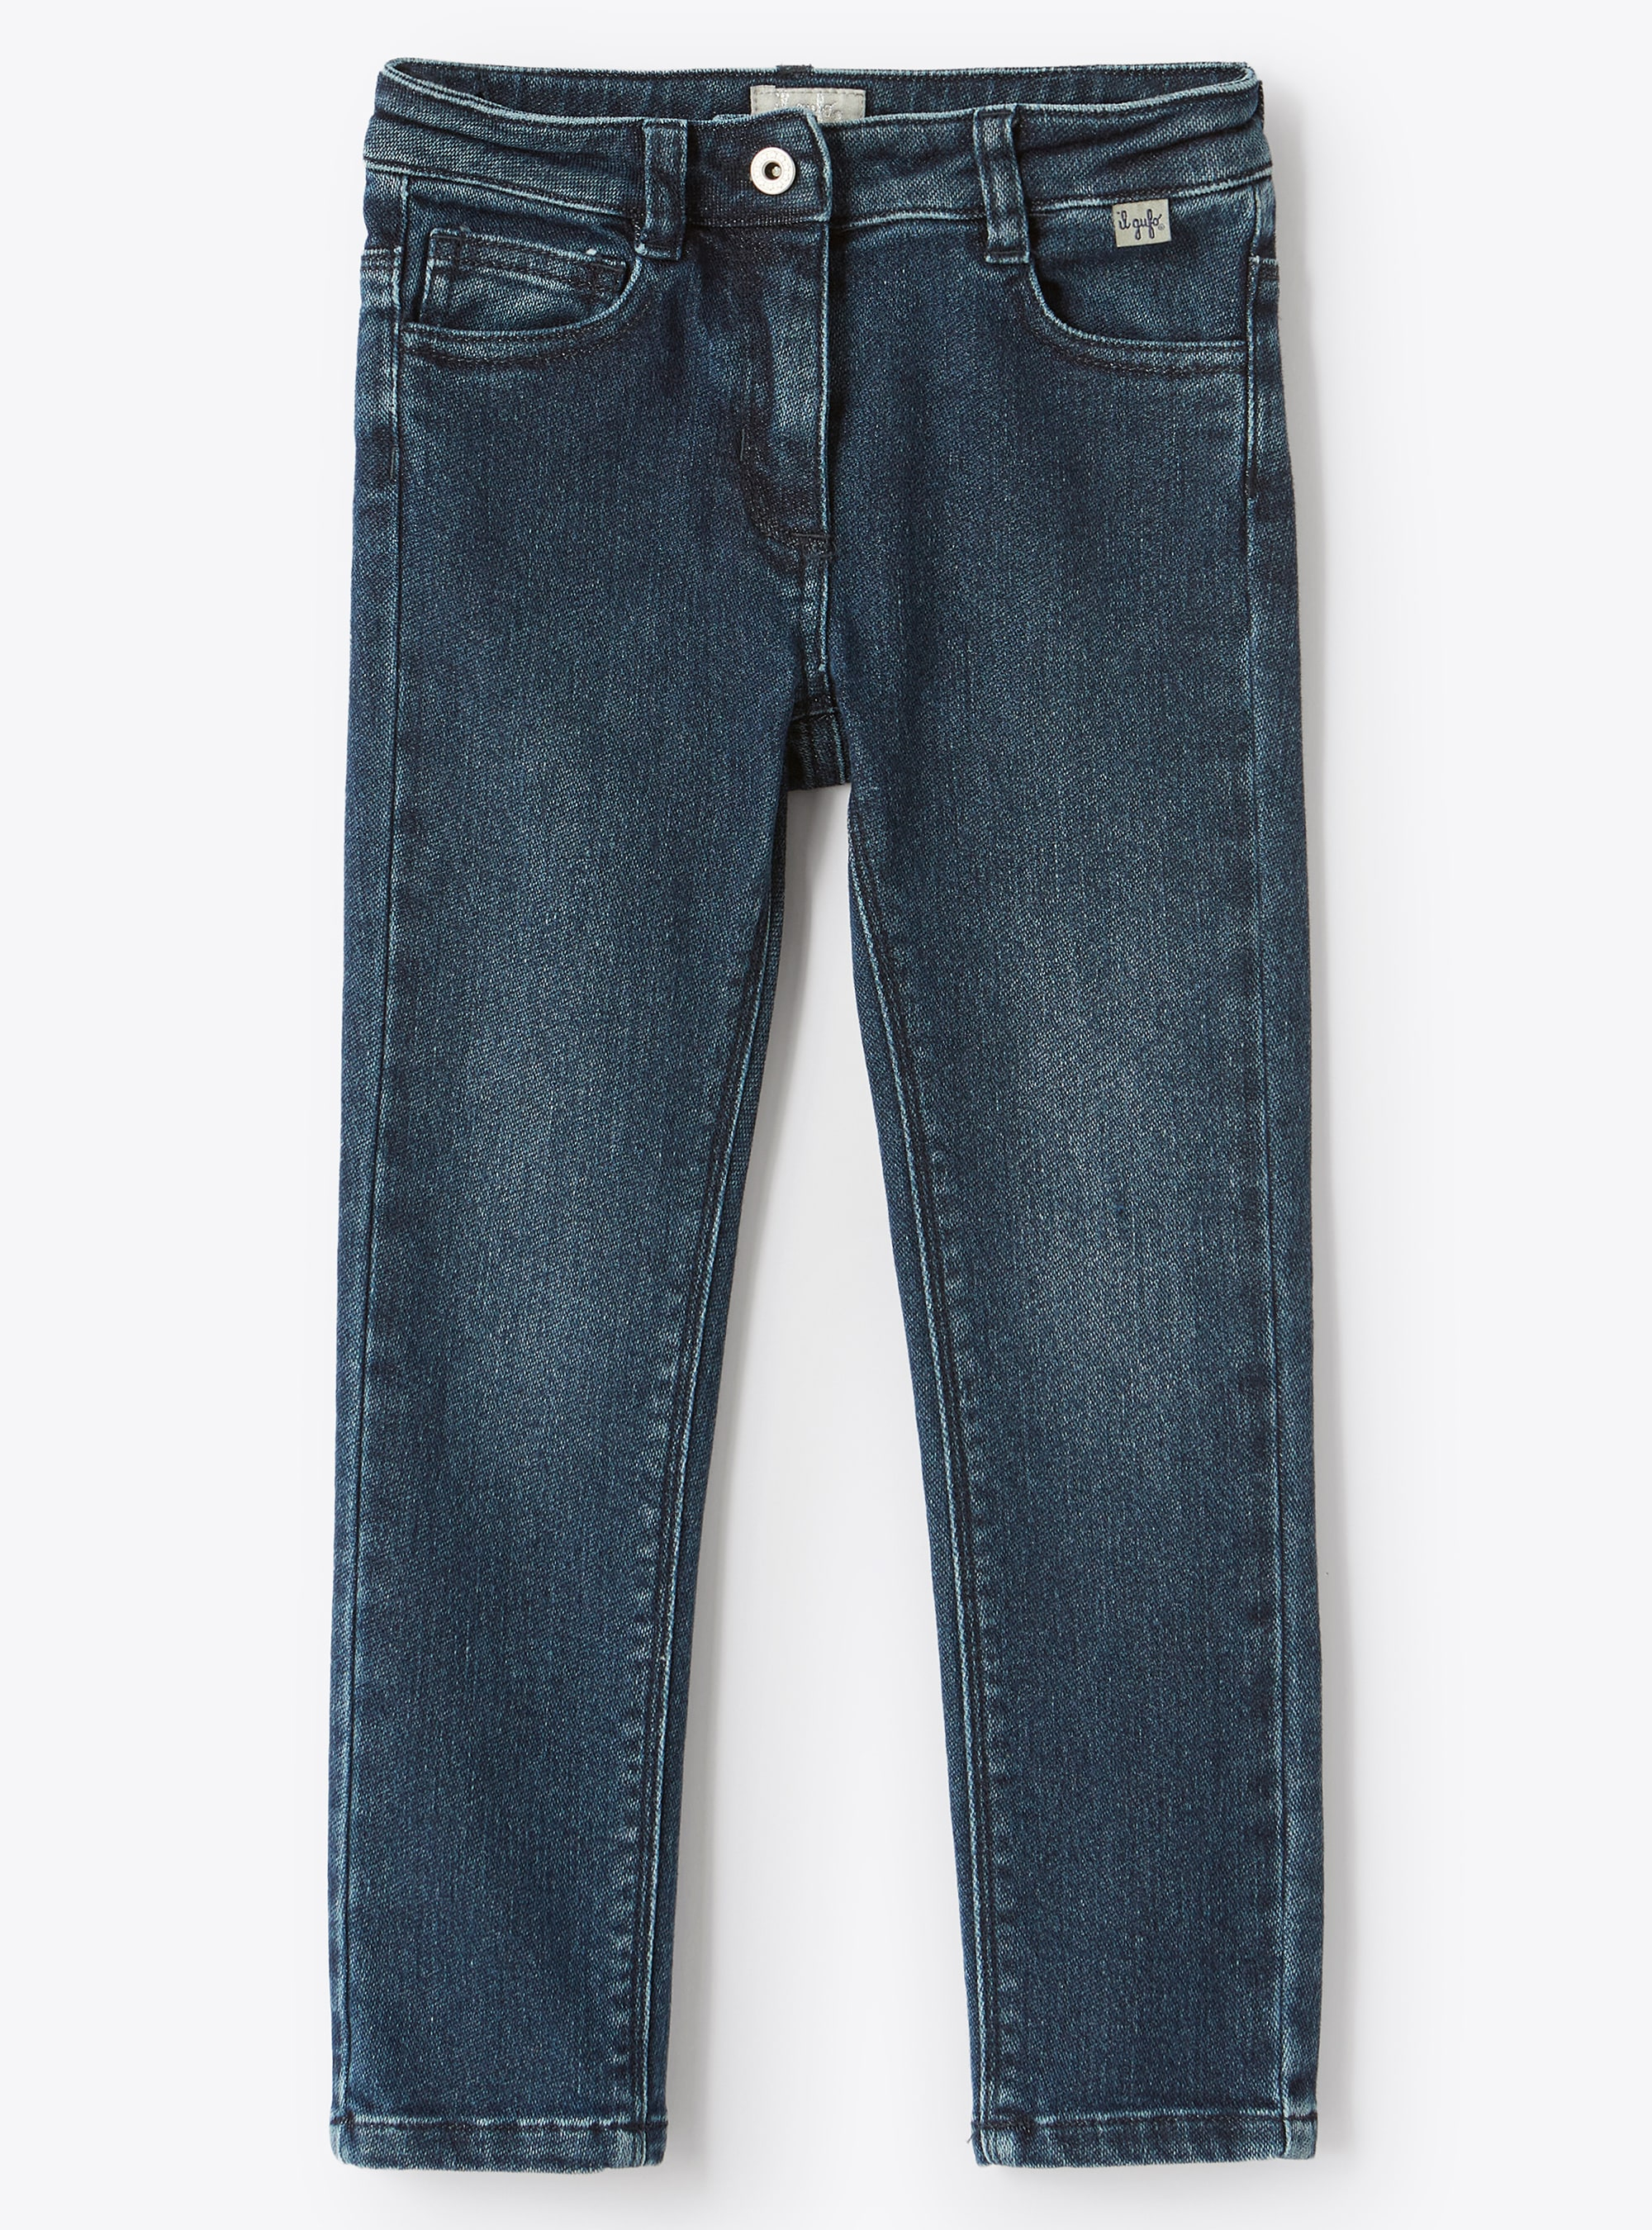 Skinny dark wash jeans - Blue | Il Gufo